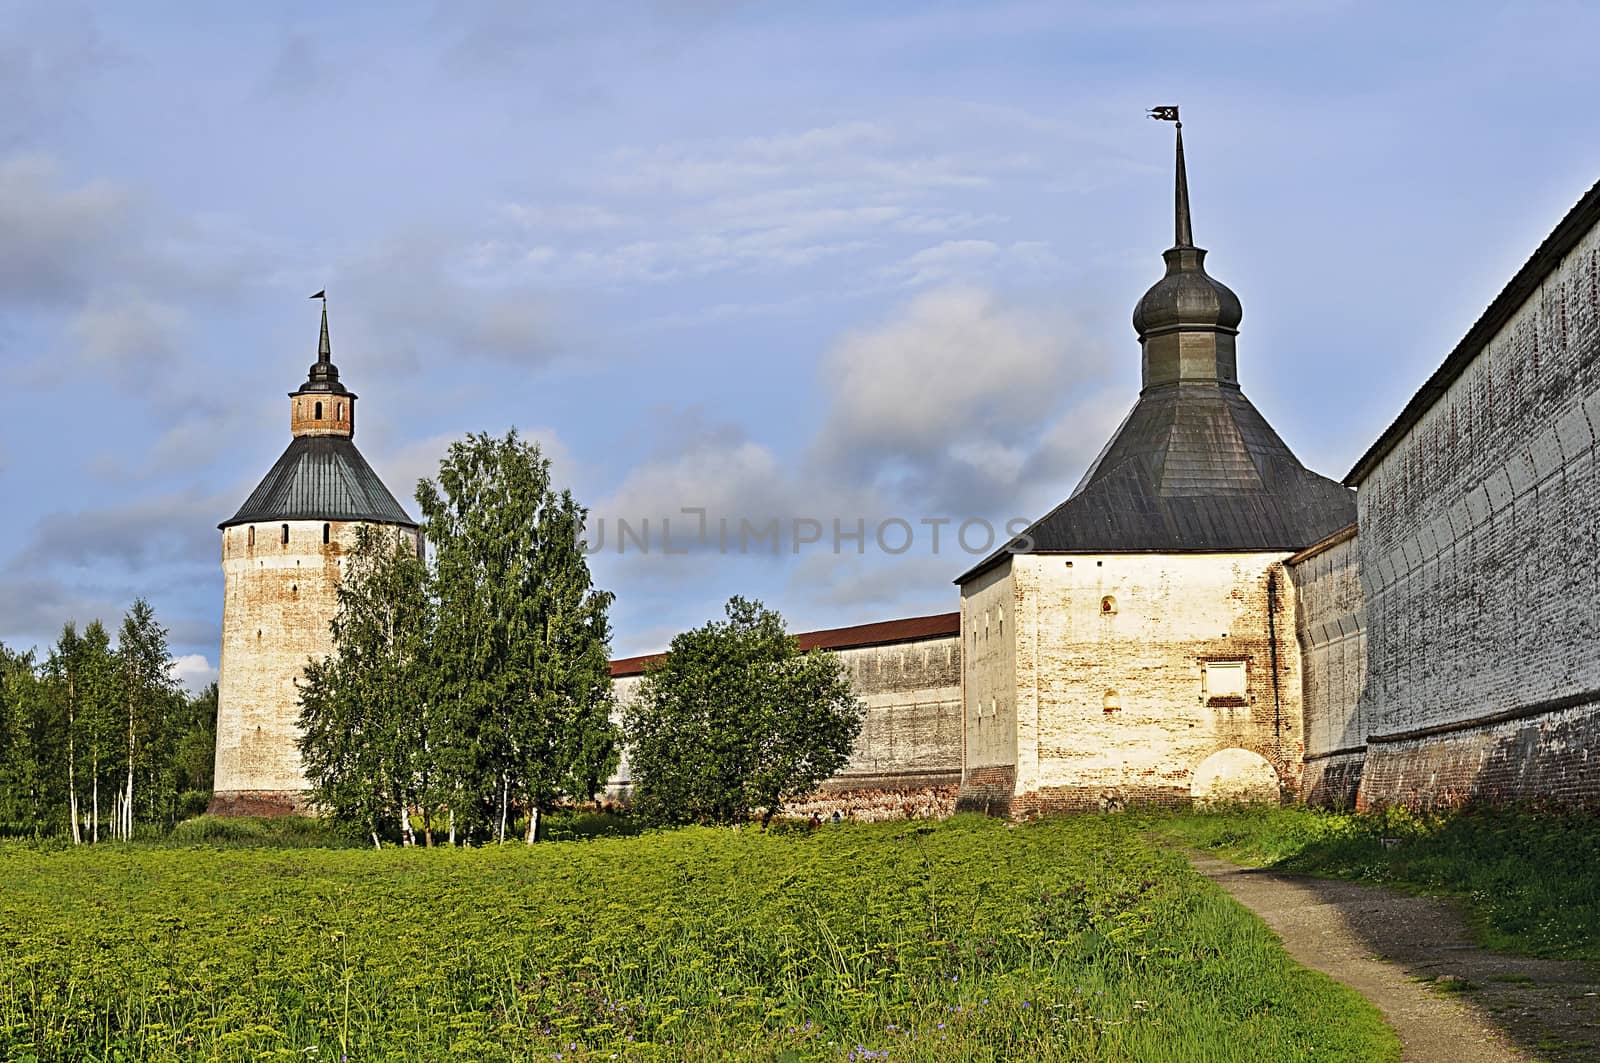 Ferapontov and Slanting towers of Kirillo-Belozersky monastery (St. Cyril-Belozersk monastery), northern Russia